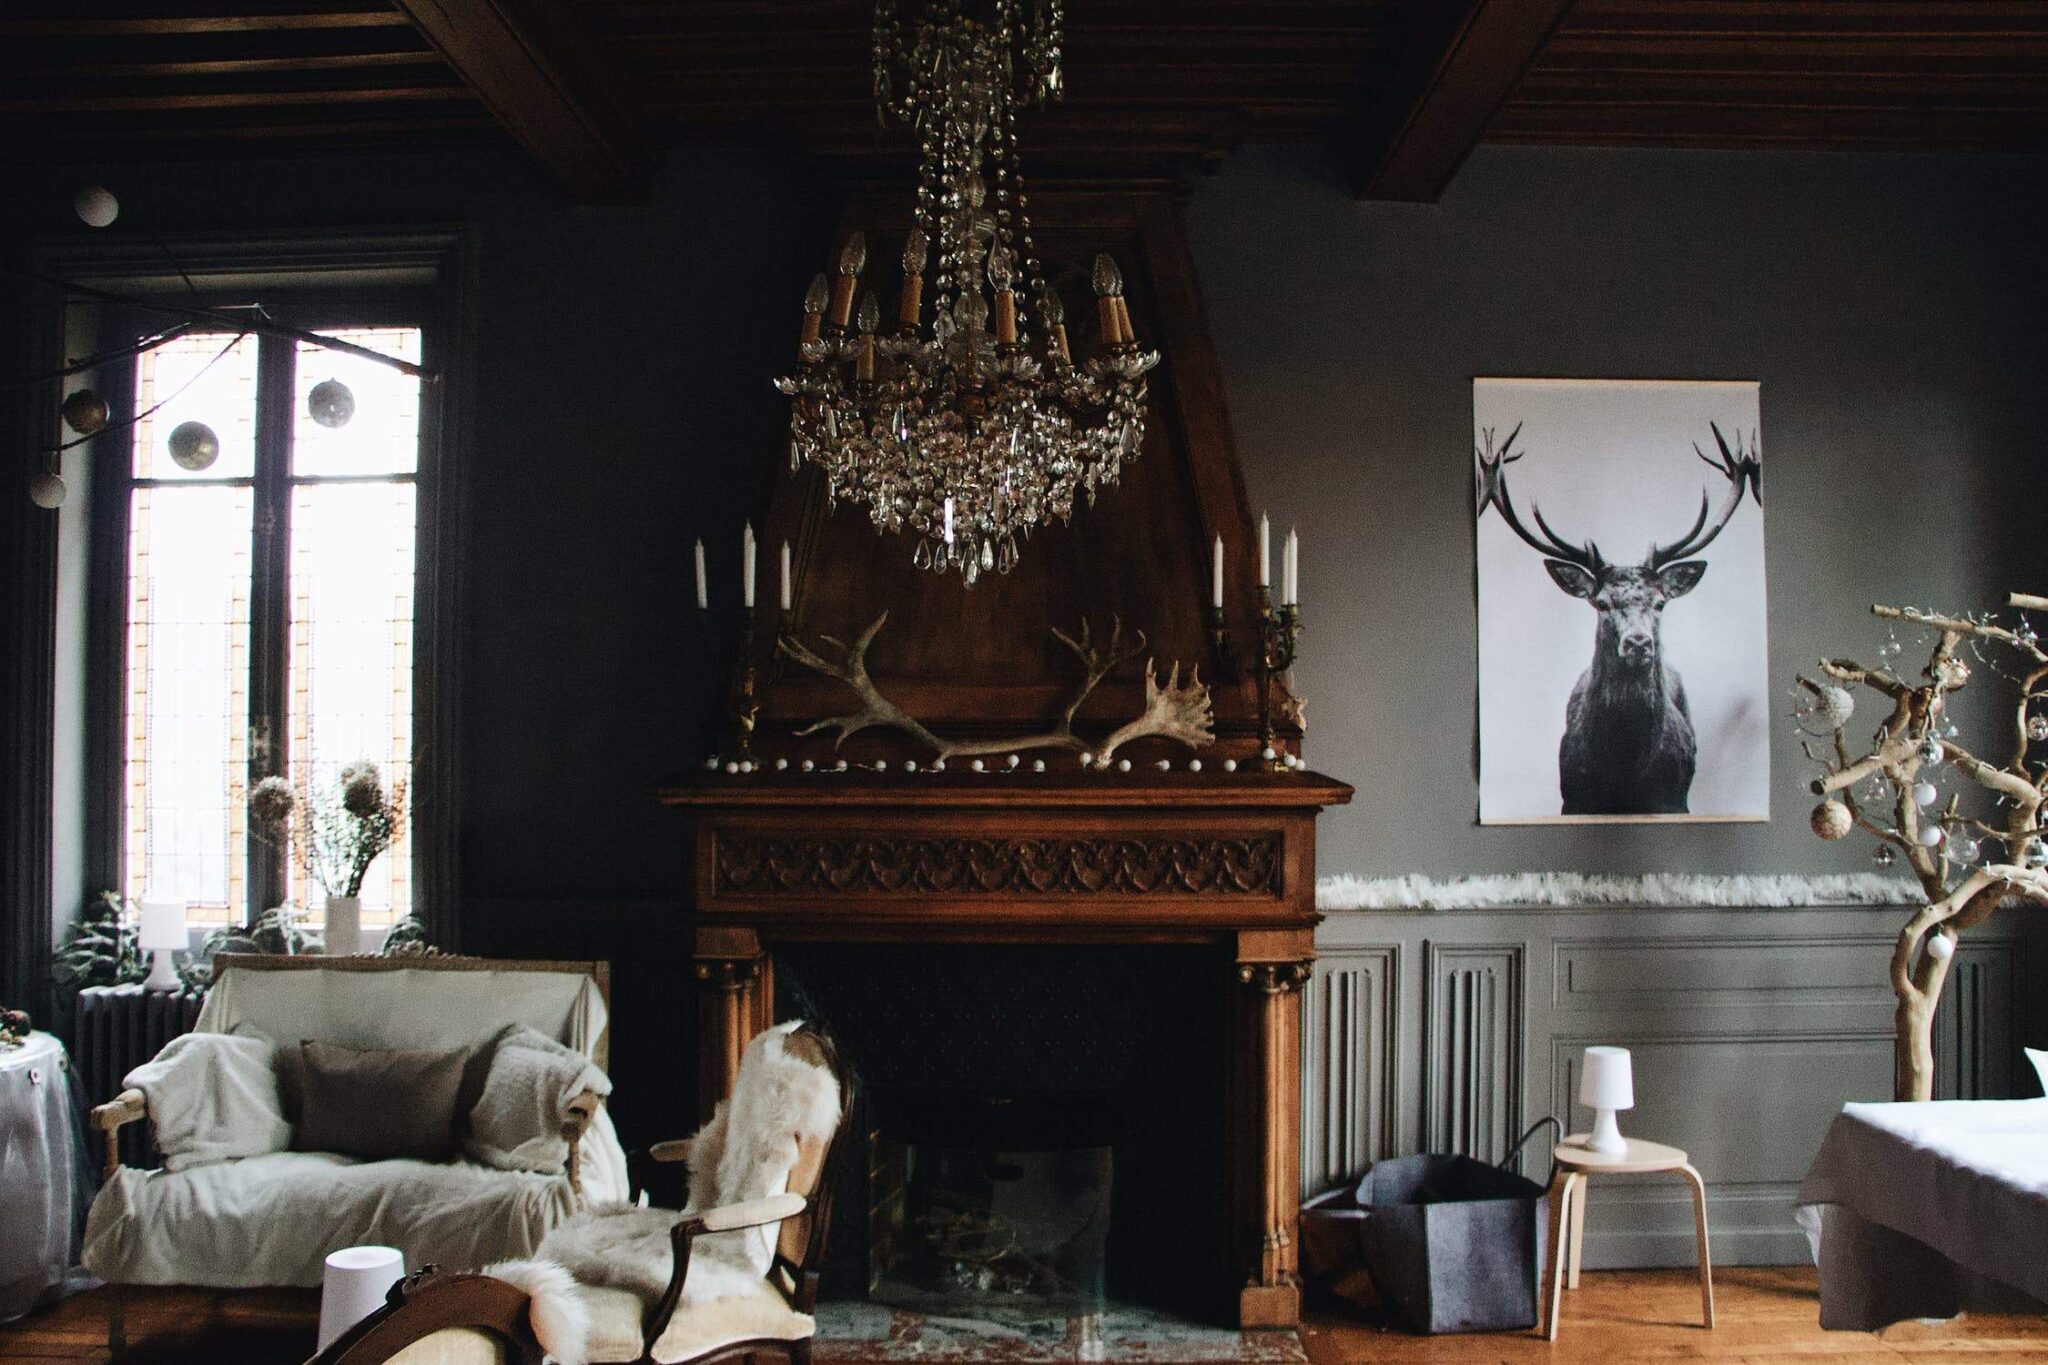 Interior décor styles we love: Baroque